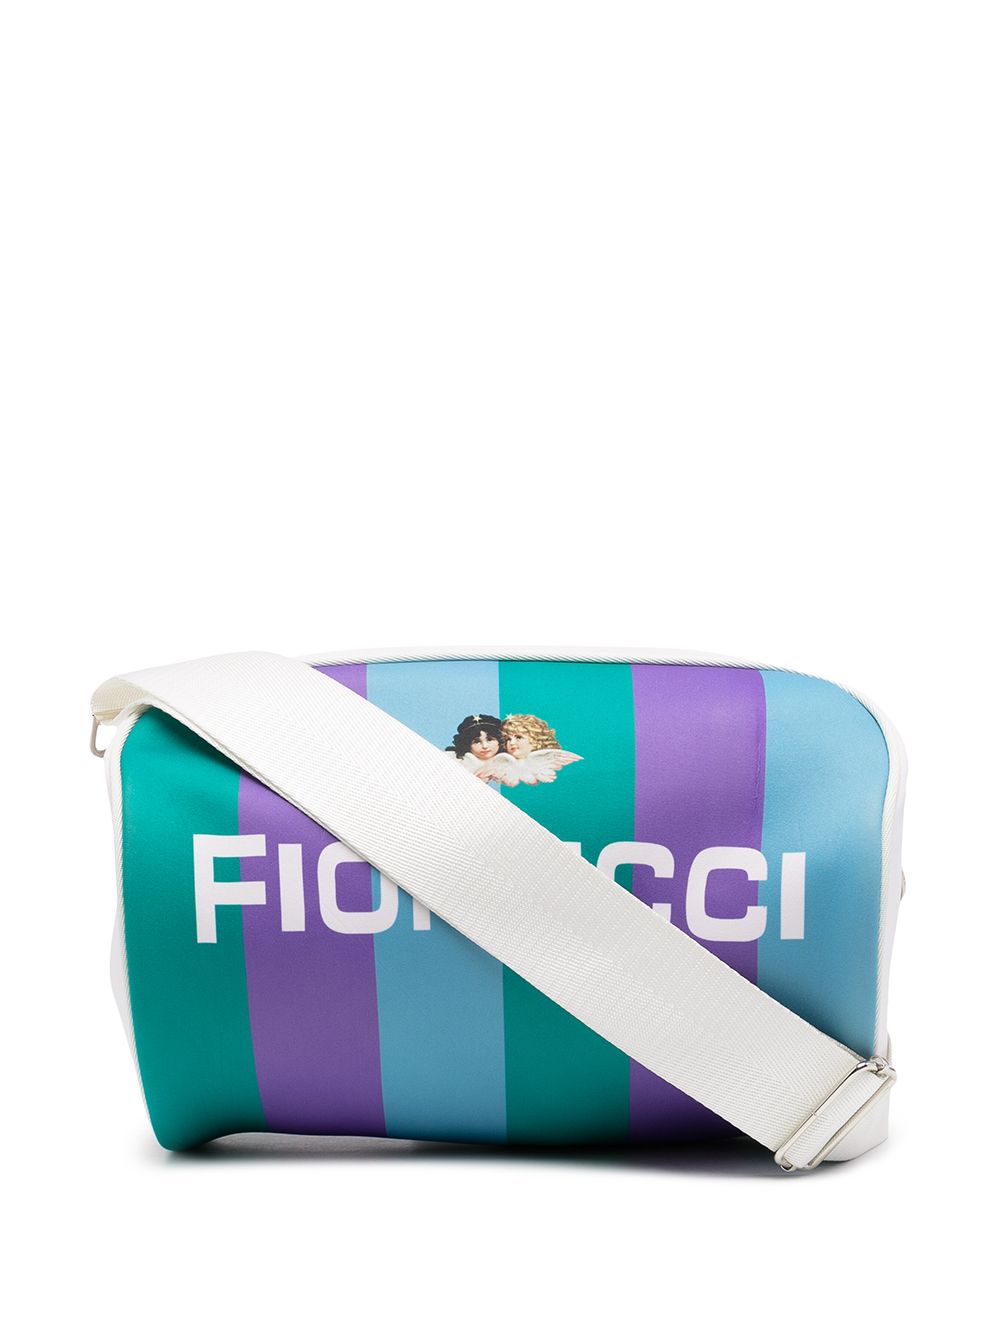 фото Fiorucci дорожная сумка equipe с логотипом